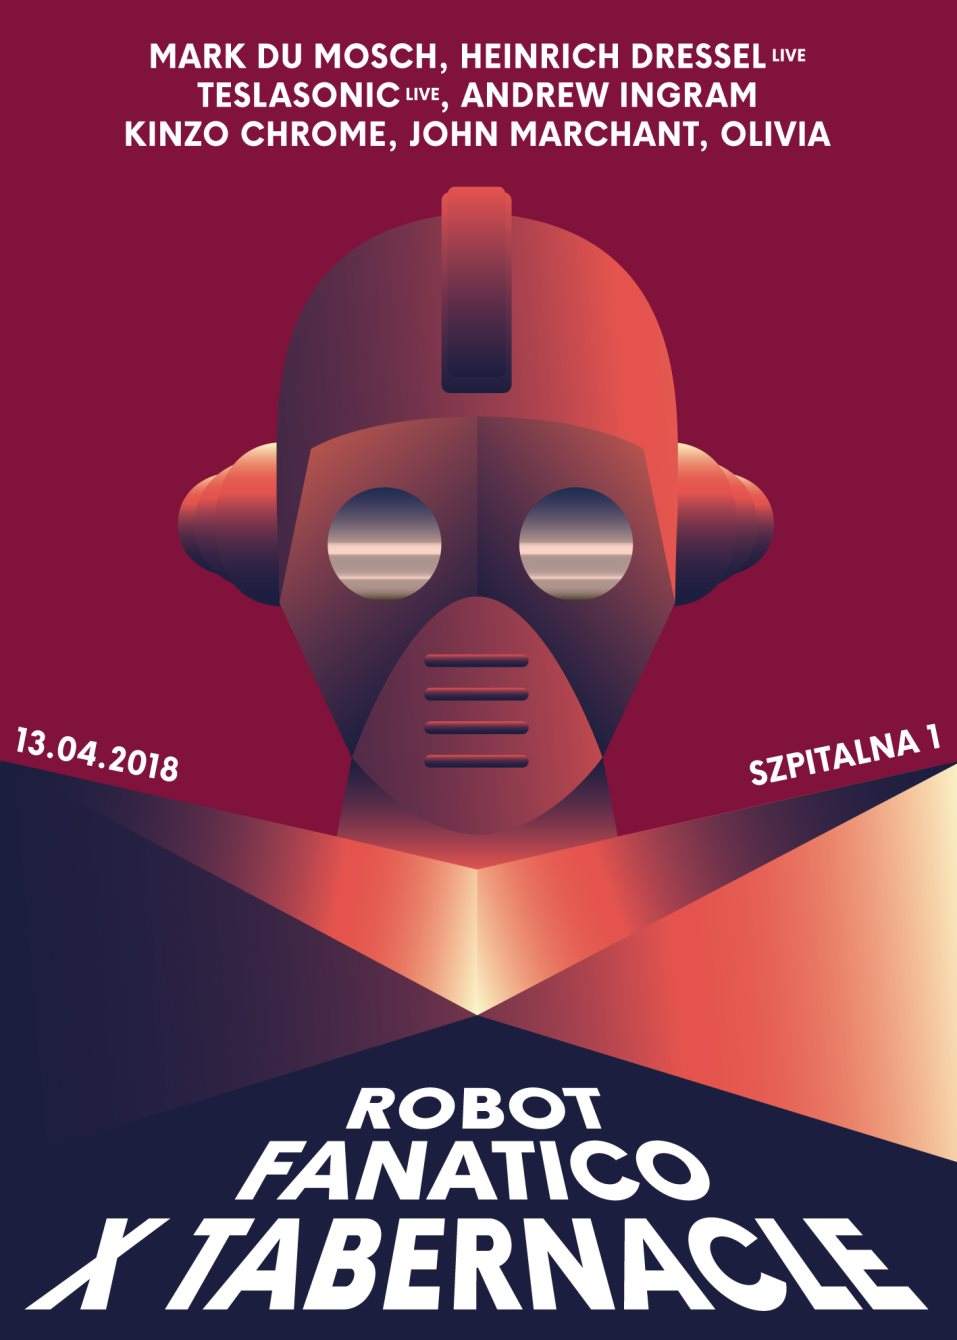 Tabernacle X Robot Fanatico: Mark Du Mosch, Heinrich Dressel - フライヤー表